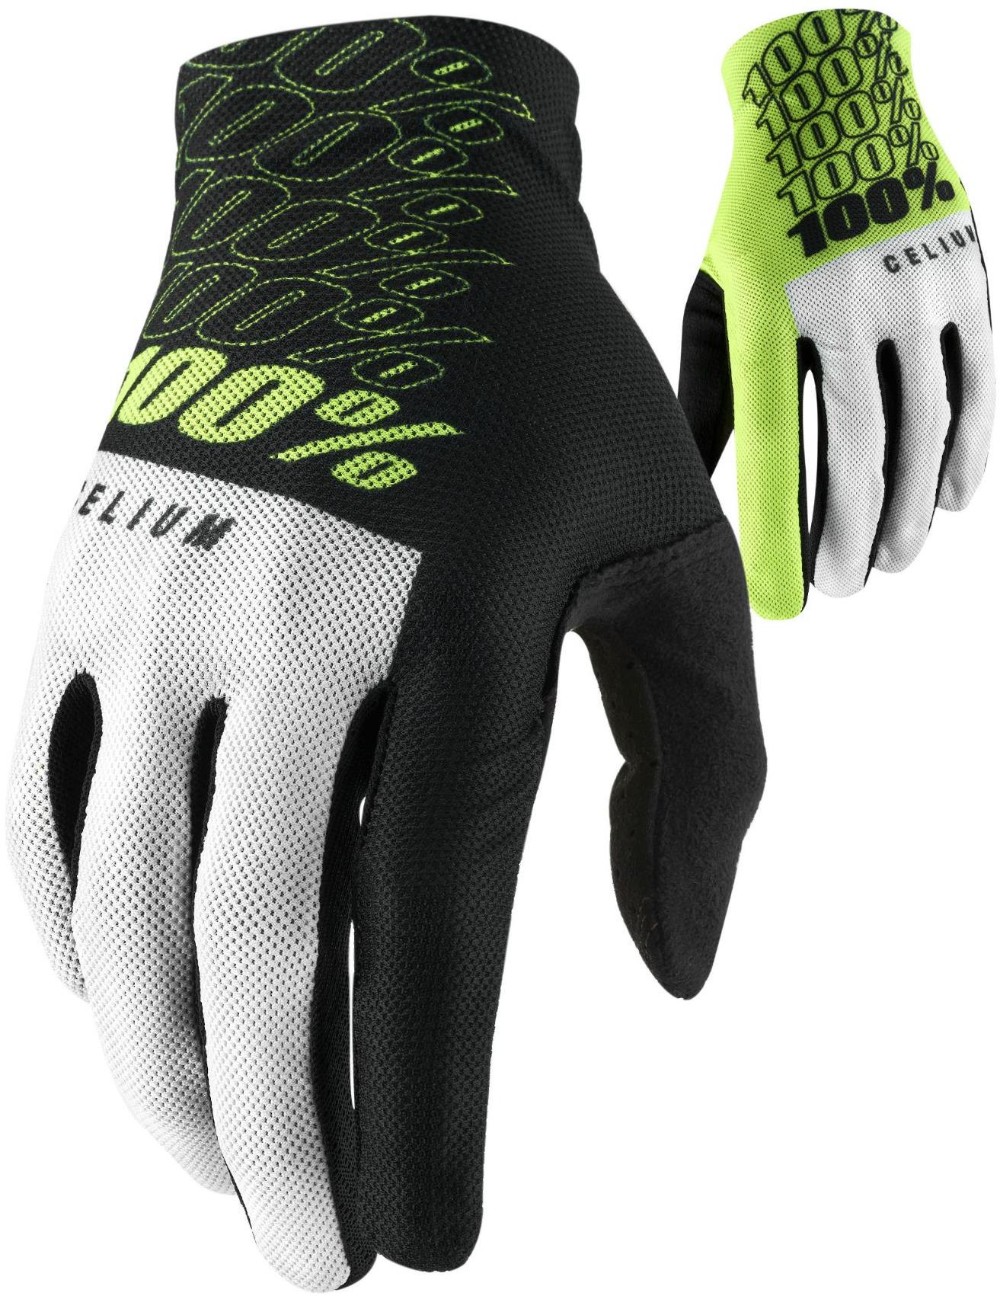 Celium Long Finger MTB Cycling Gloves image 0